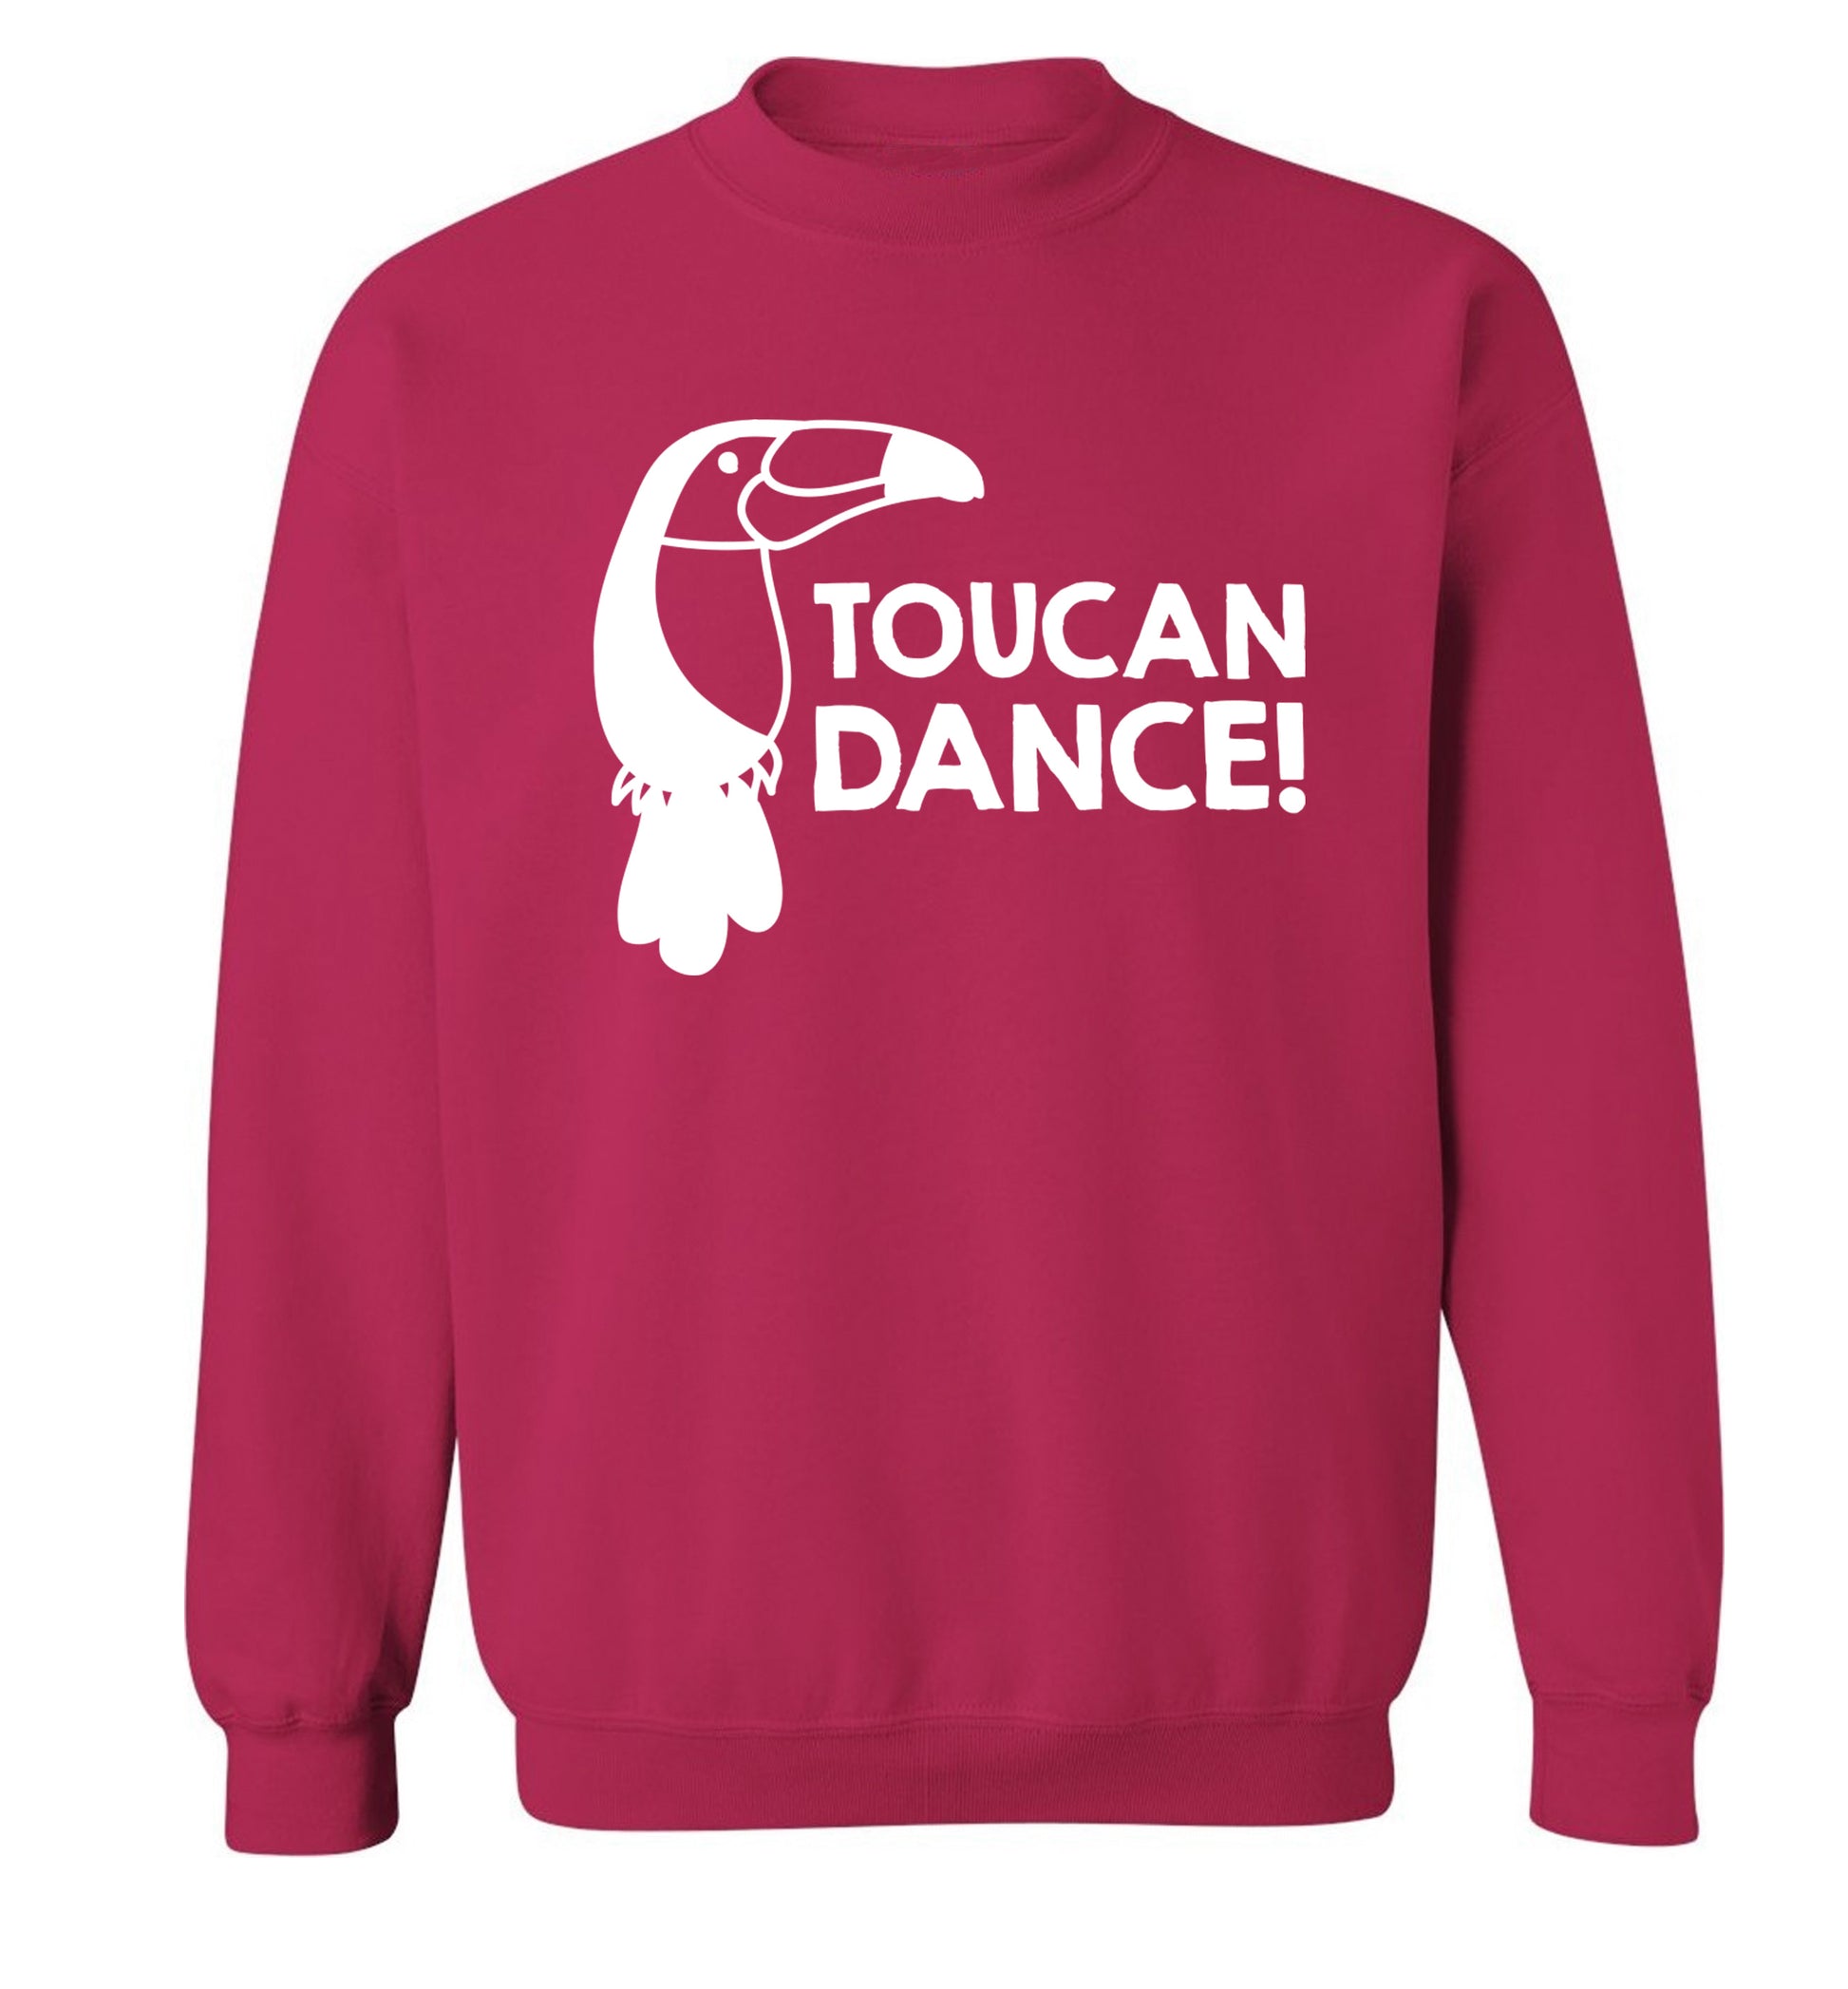 Toucan dance Adult's unisex pink Sweater 2XL